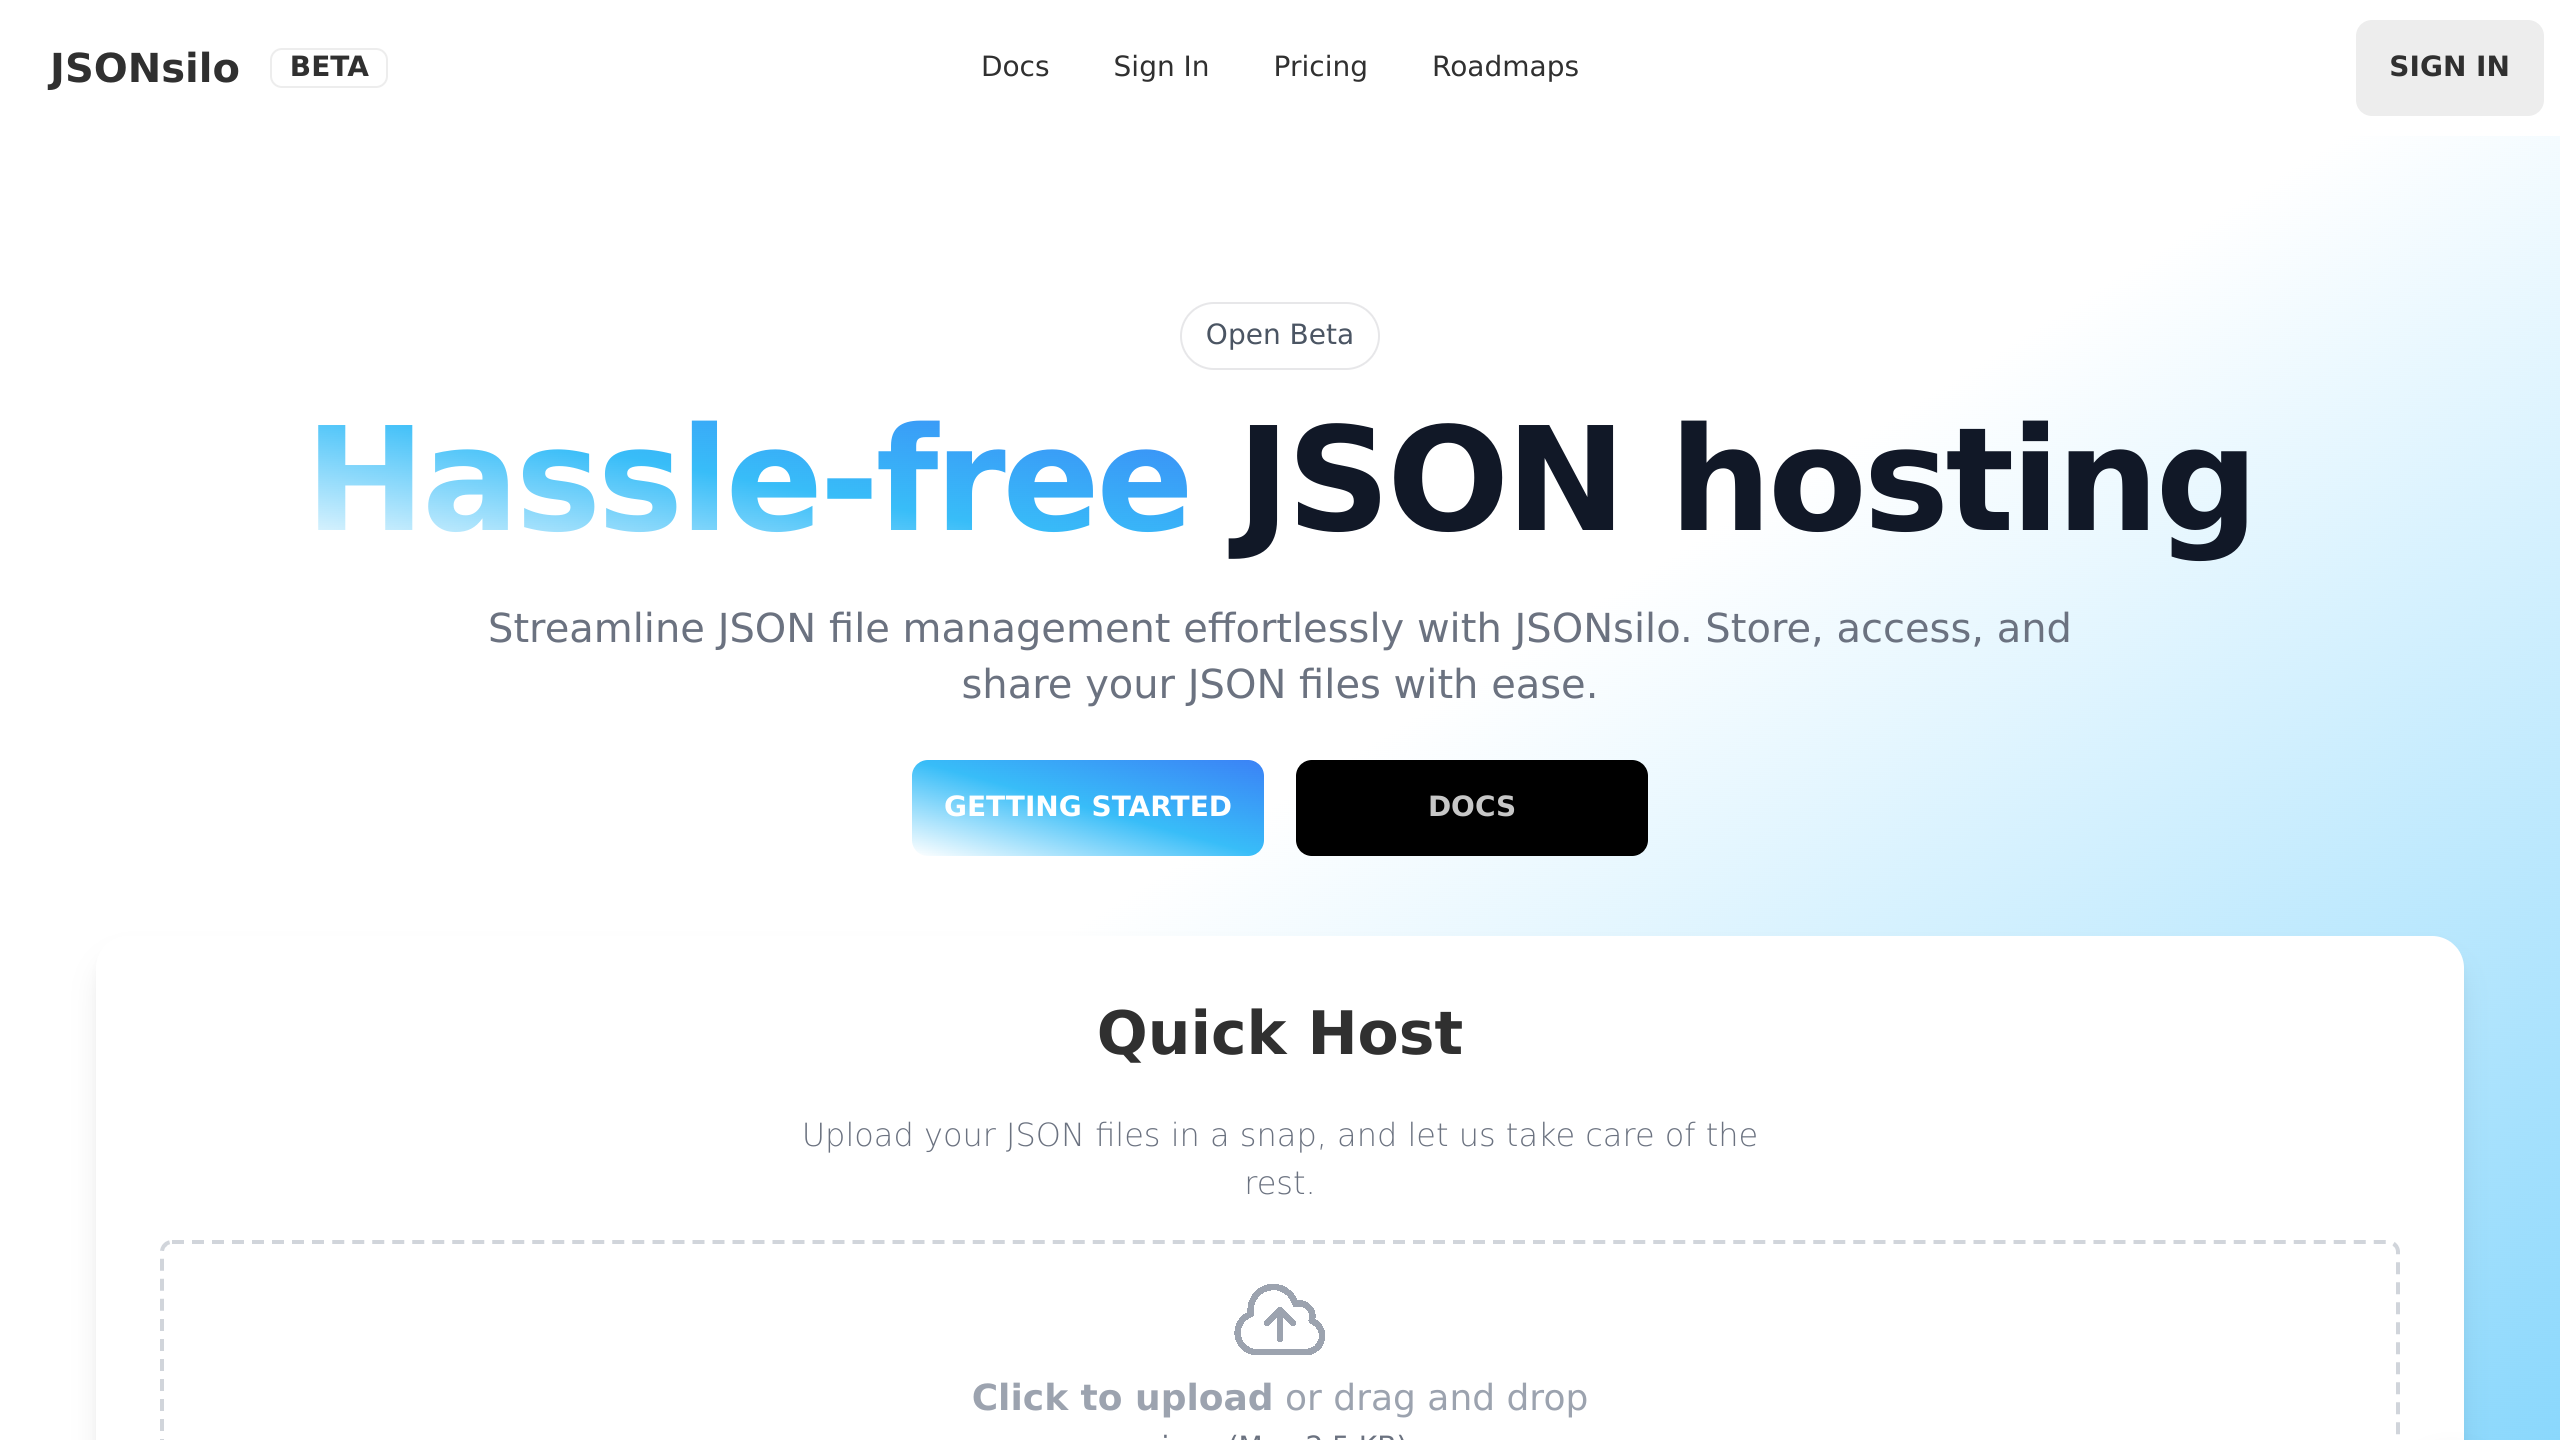 JSONsilo.com's website screenshot